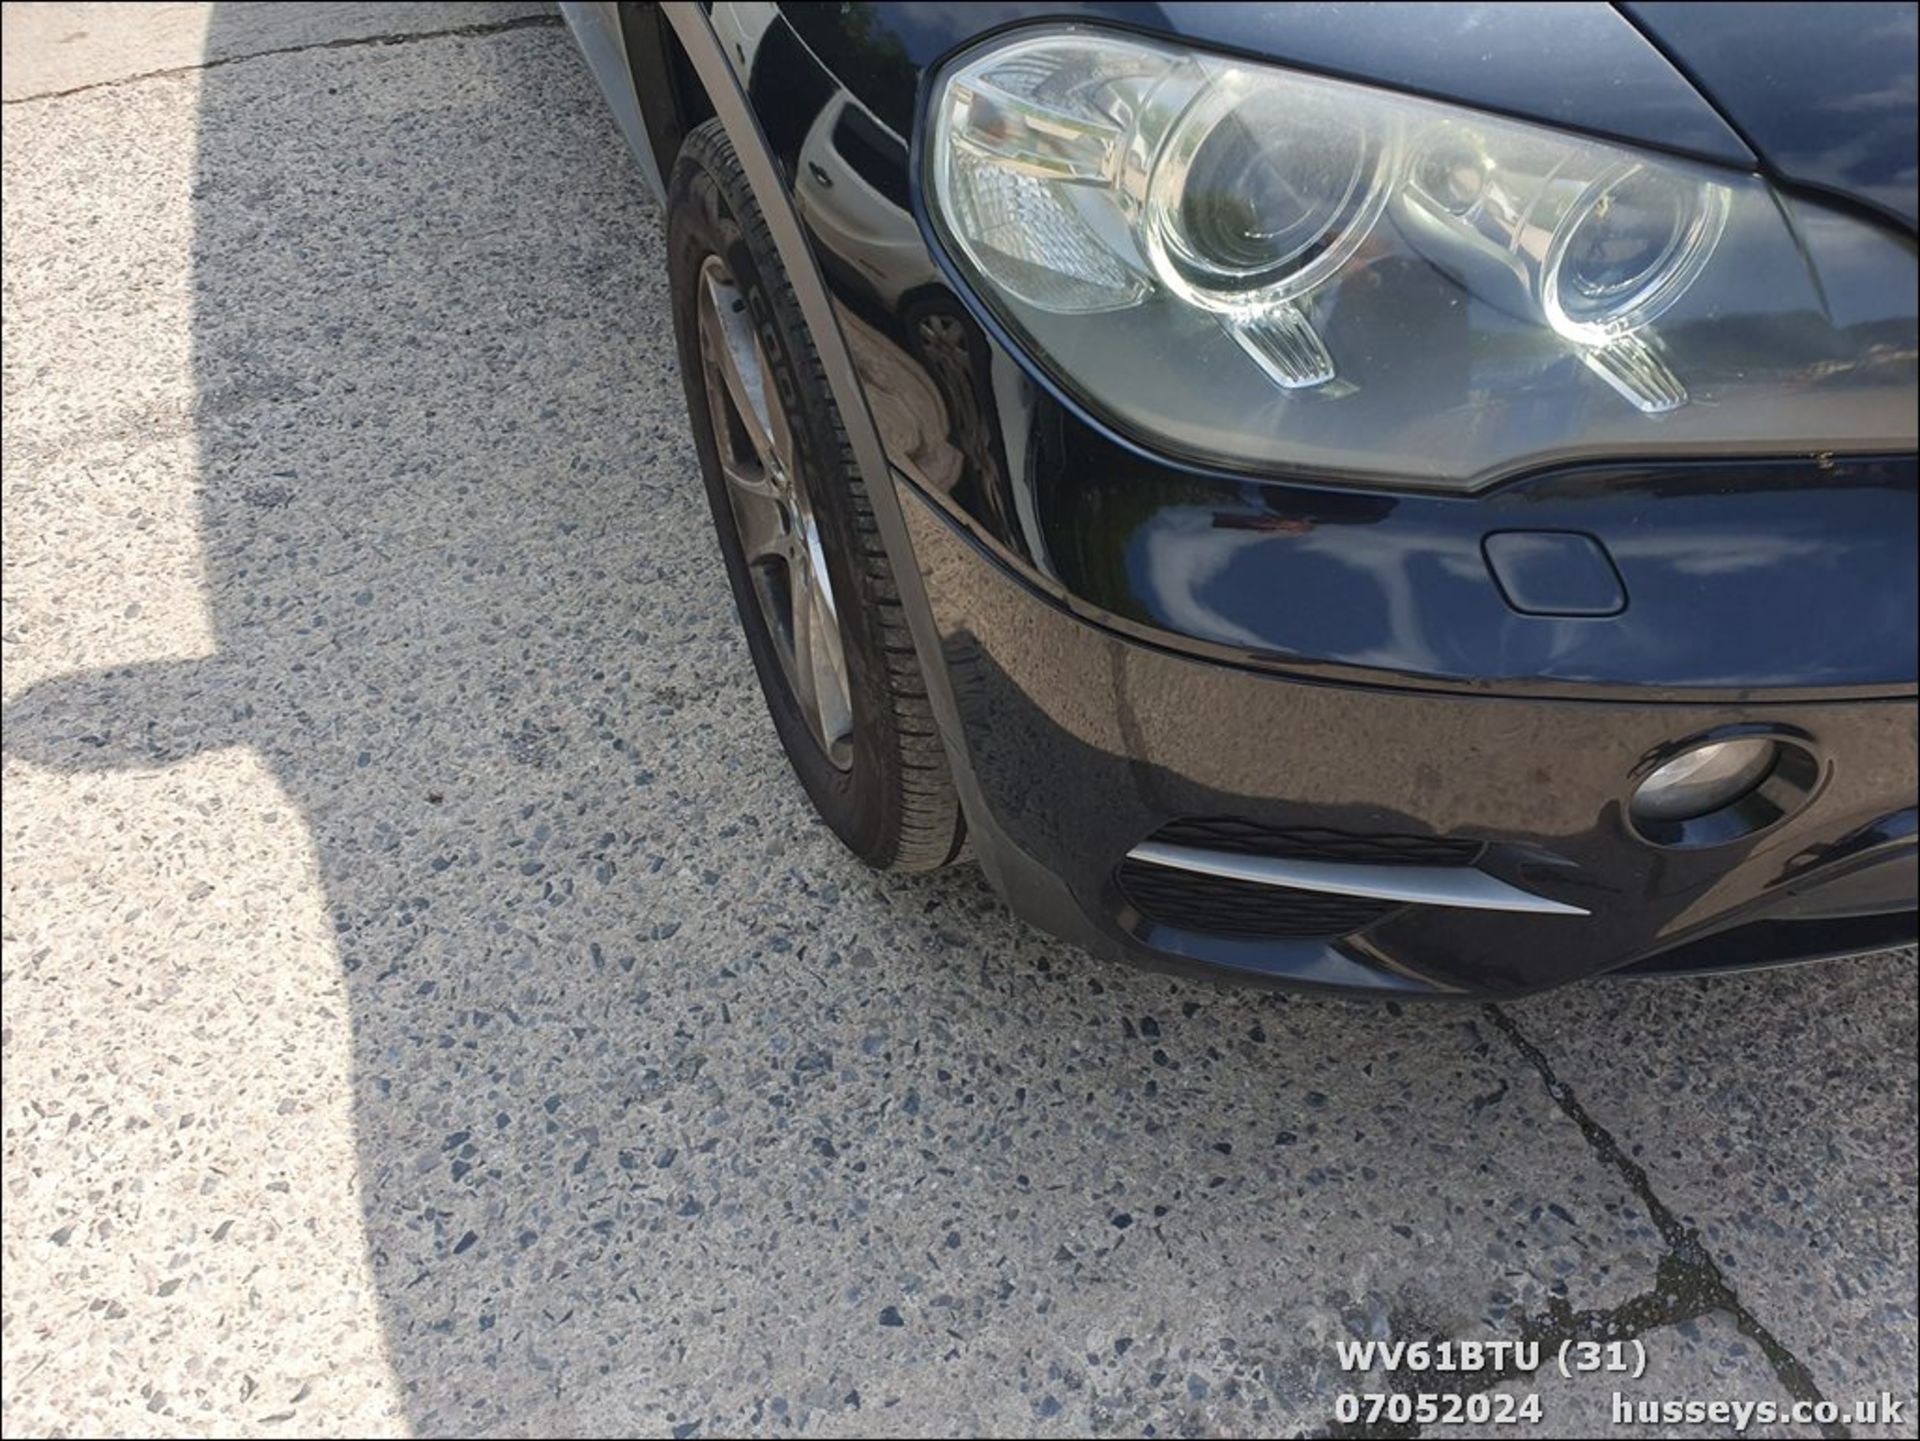 11/61 BMW X5 XDRIVE30D SE AUTO - 2993cc 5dr Estate (Black, 86k) - Image 32 of 41